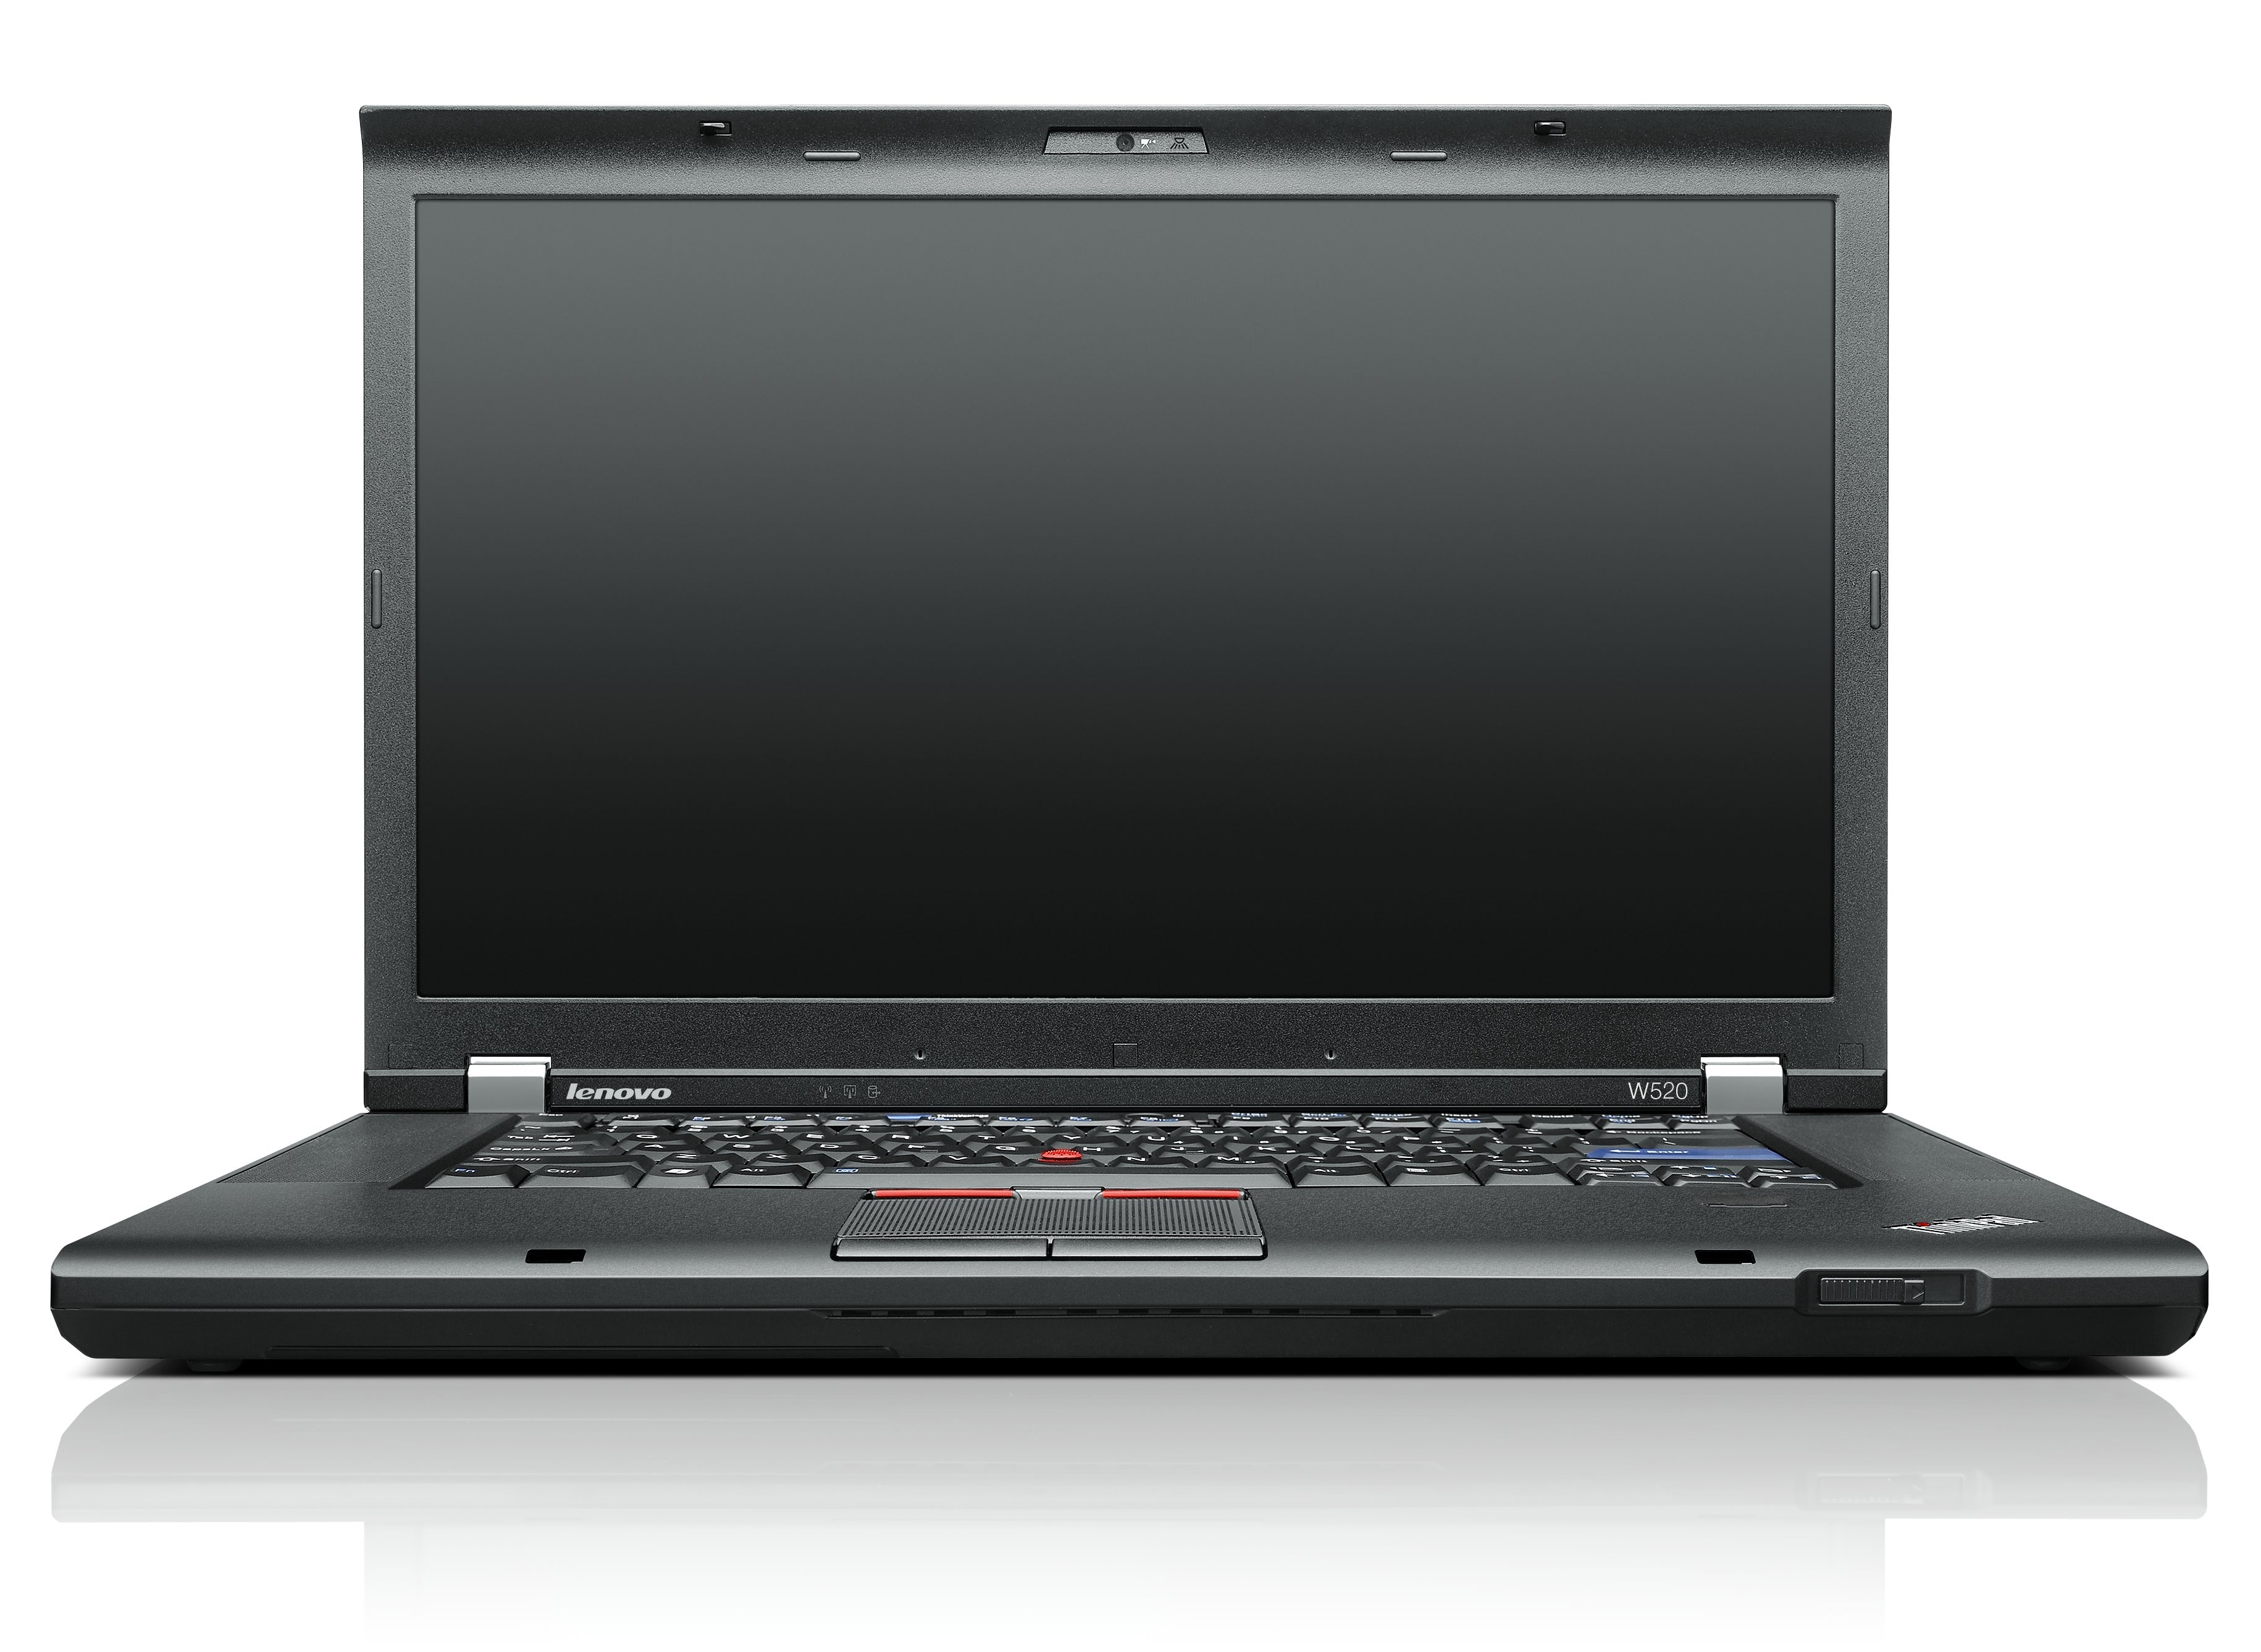 Lenovo ThinkPad W520 15.6" Laptop